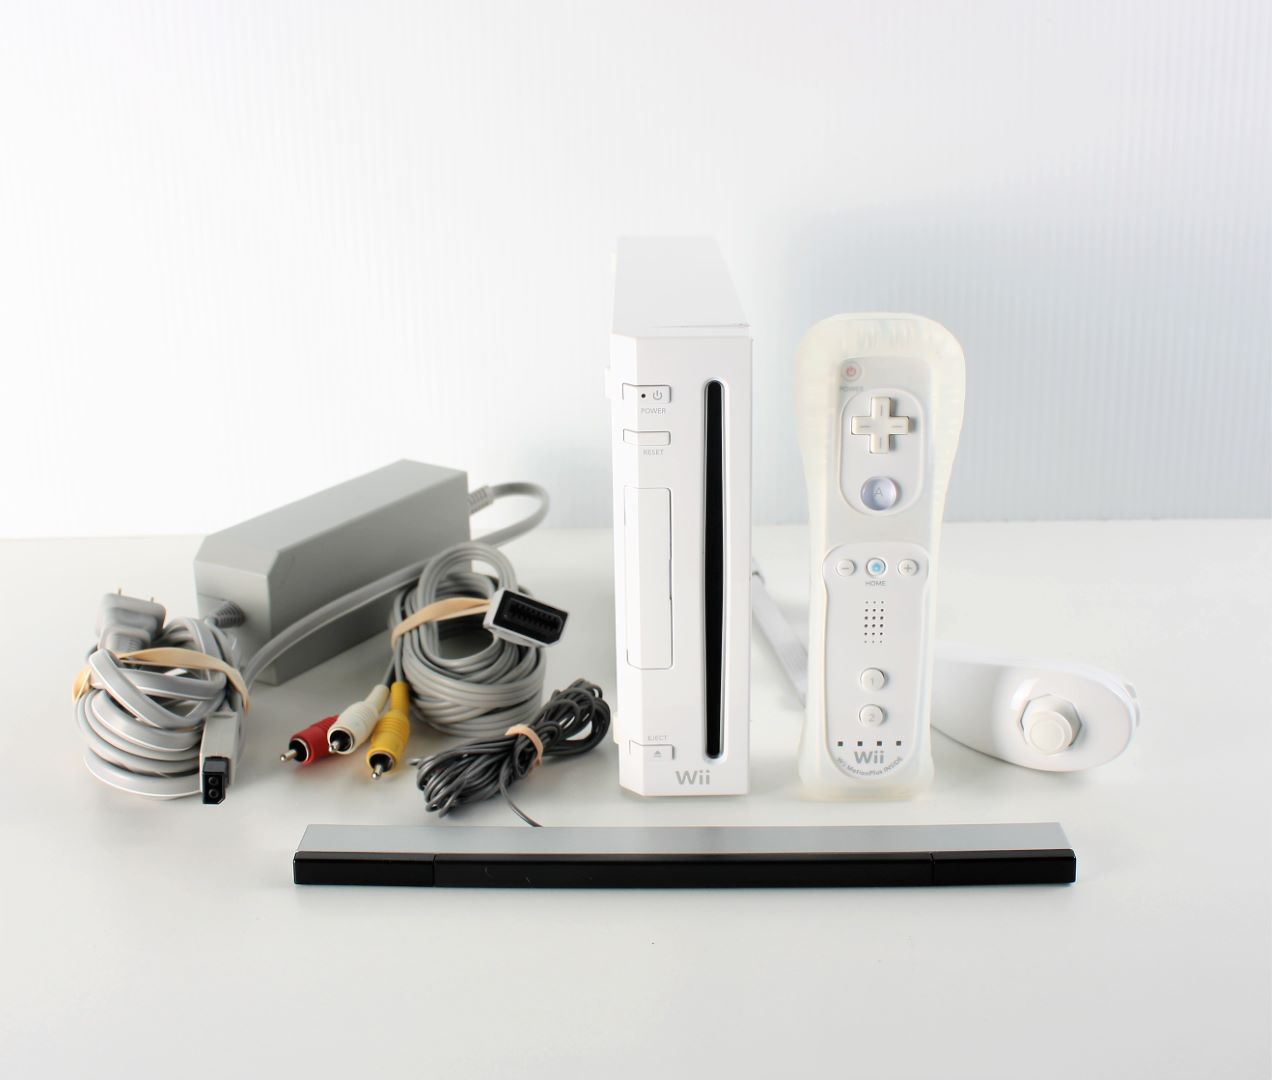 Console de jeu NINTENDO Wii - Instant comptant